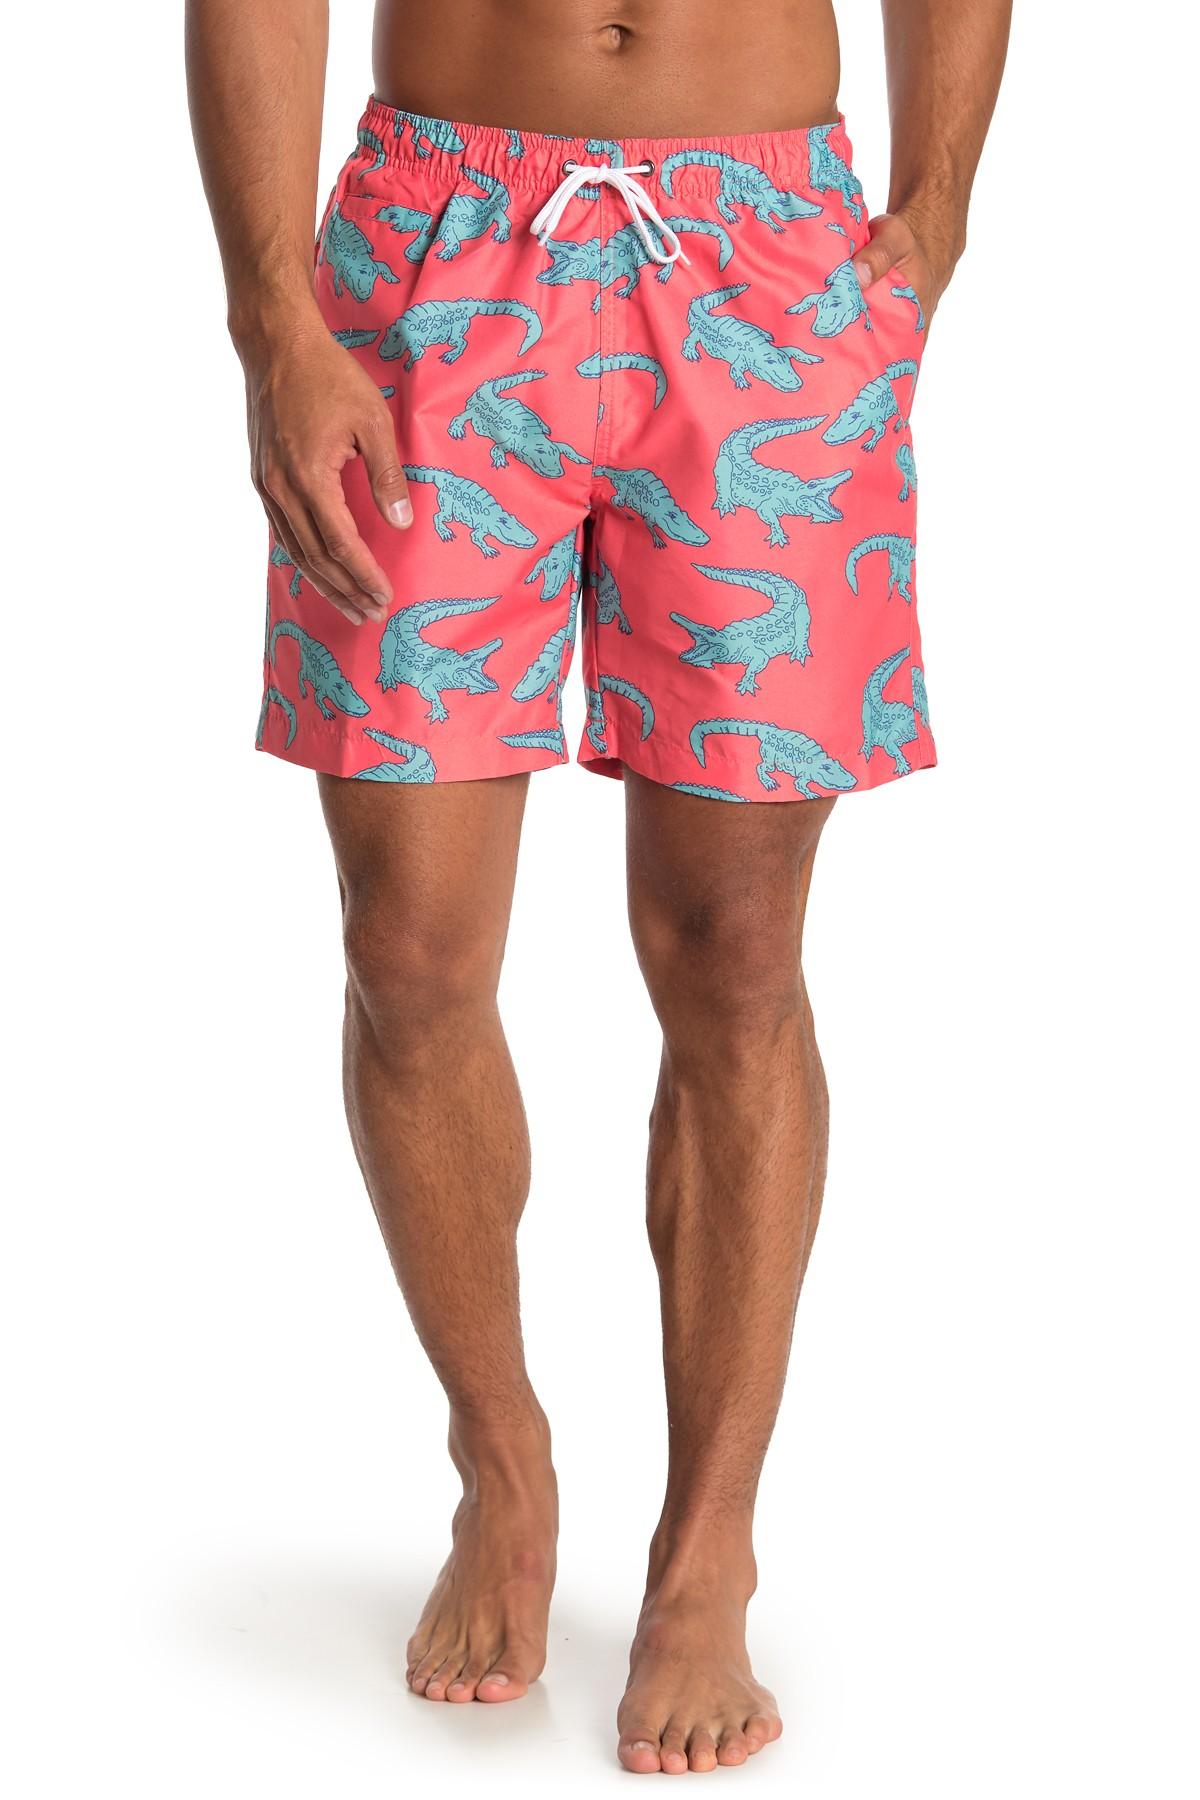 UHT28DG Vector Pattern Mens Printing Beach Board Shorts Slim-Fit Pockets Swim Trunks 